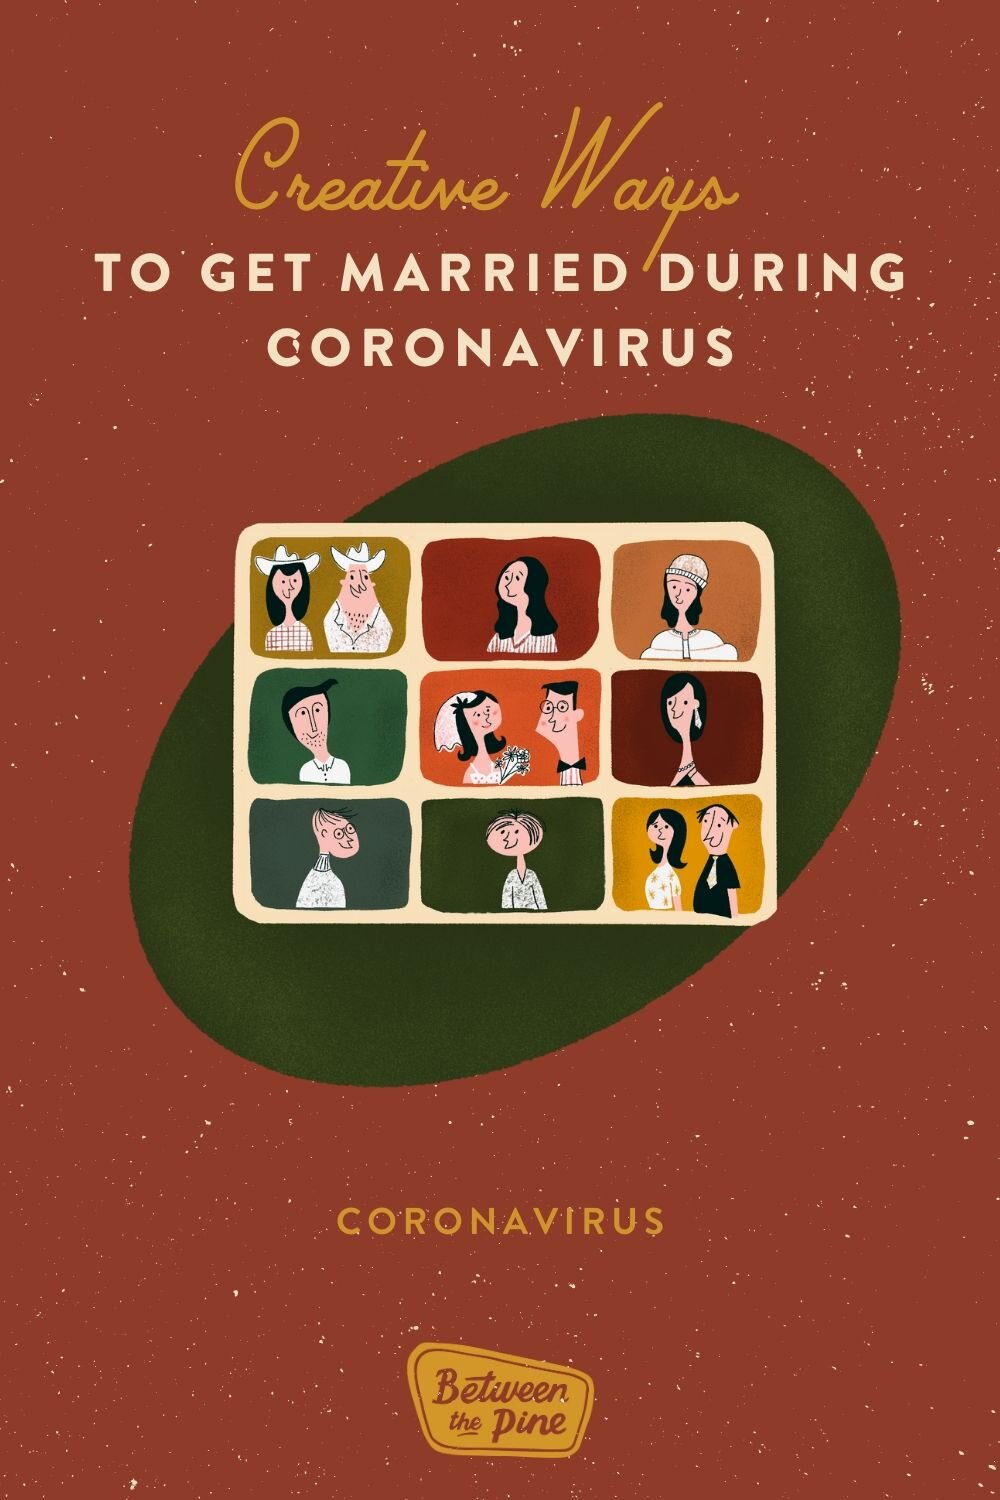 How to Elope during Coronavirus | Between the Pine Adventure Elopement Photography